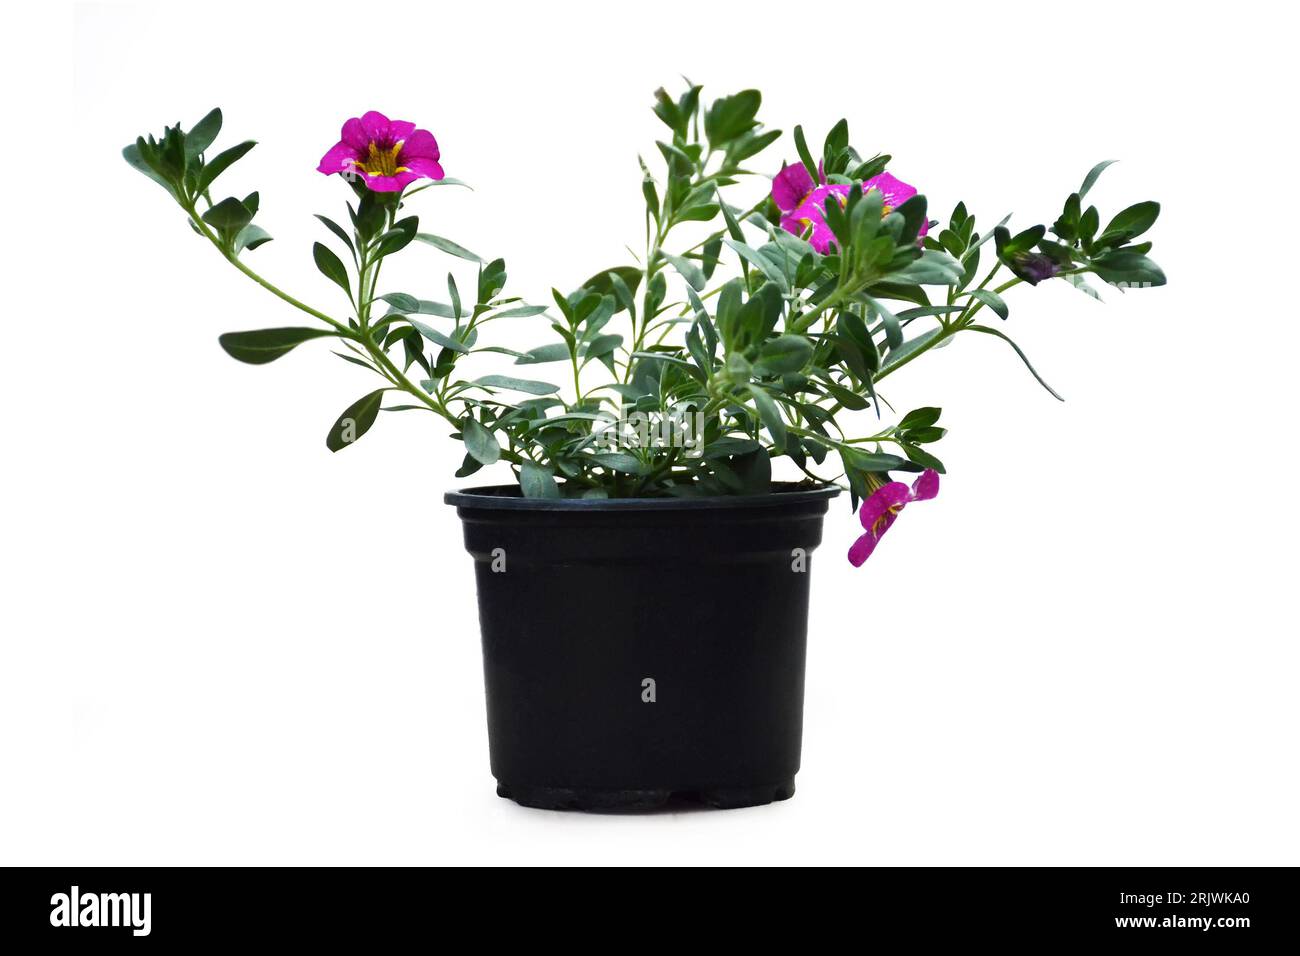 Million bells (Calibrachoa) flower plant in pot isolated on white background Stock Photo